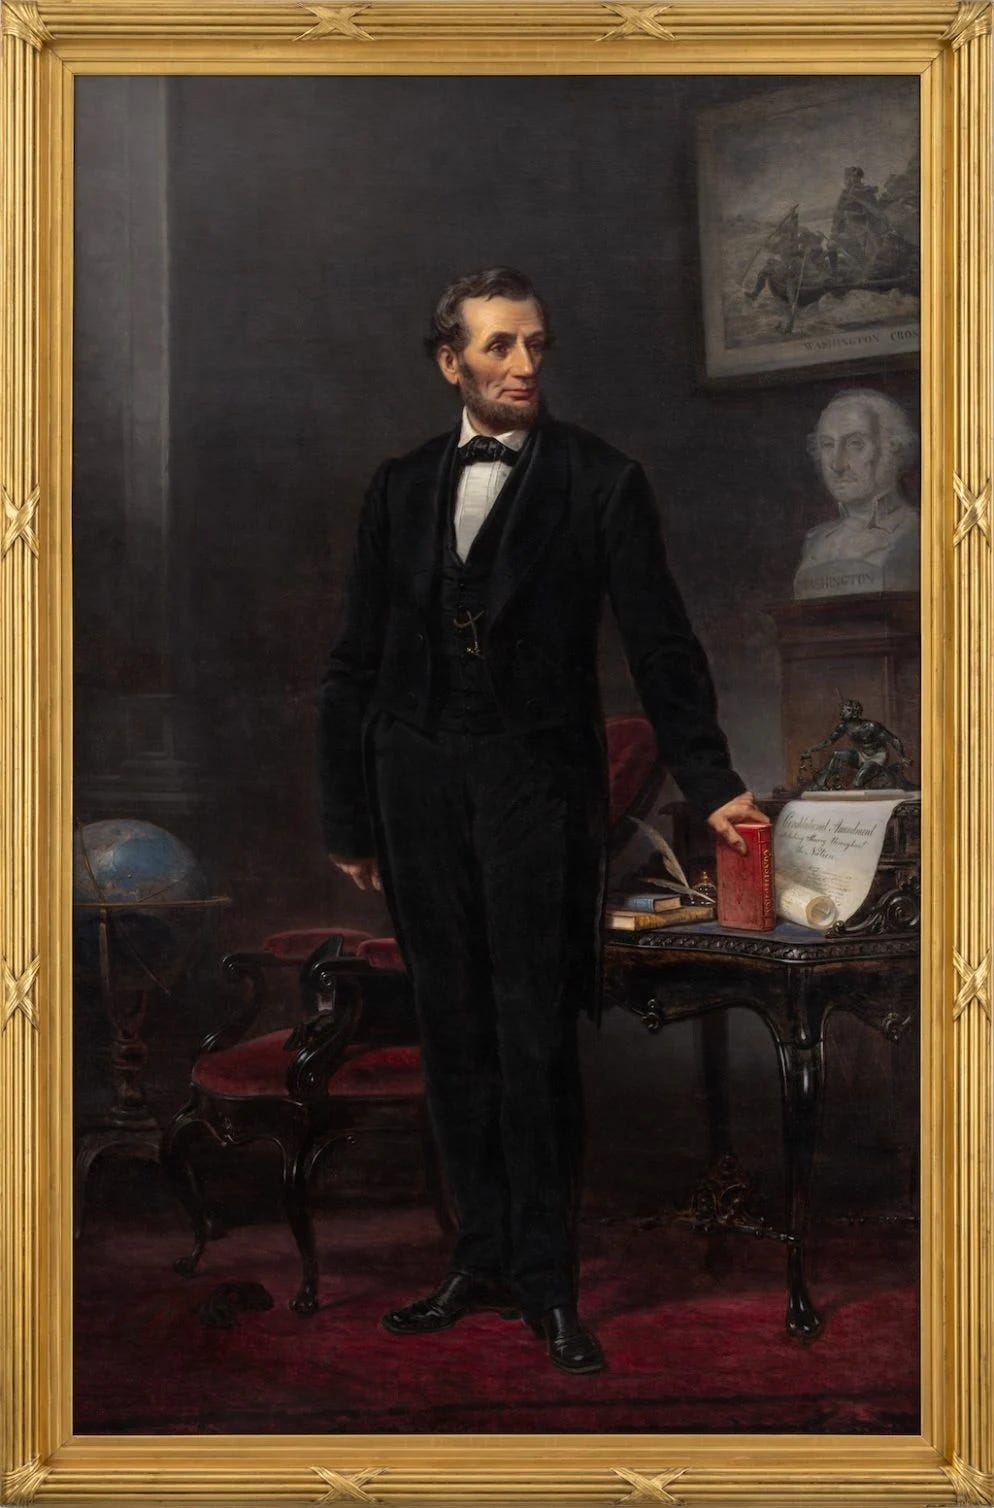 WFK Travers portrait of Abraham Lincoln